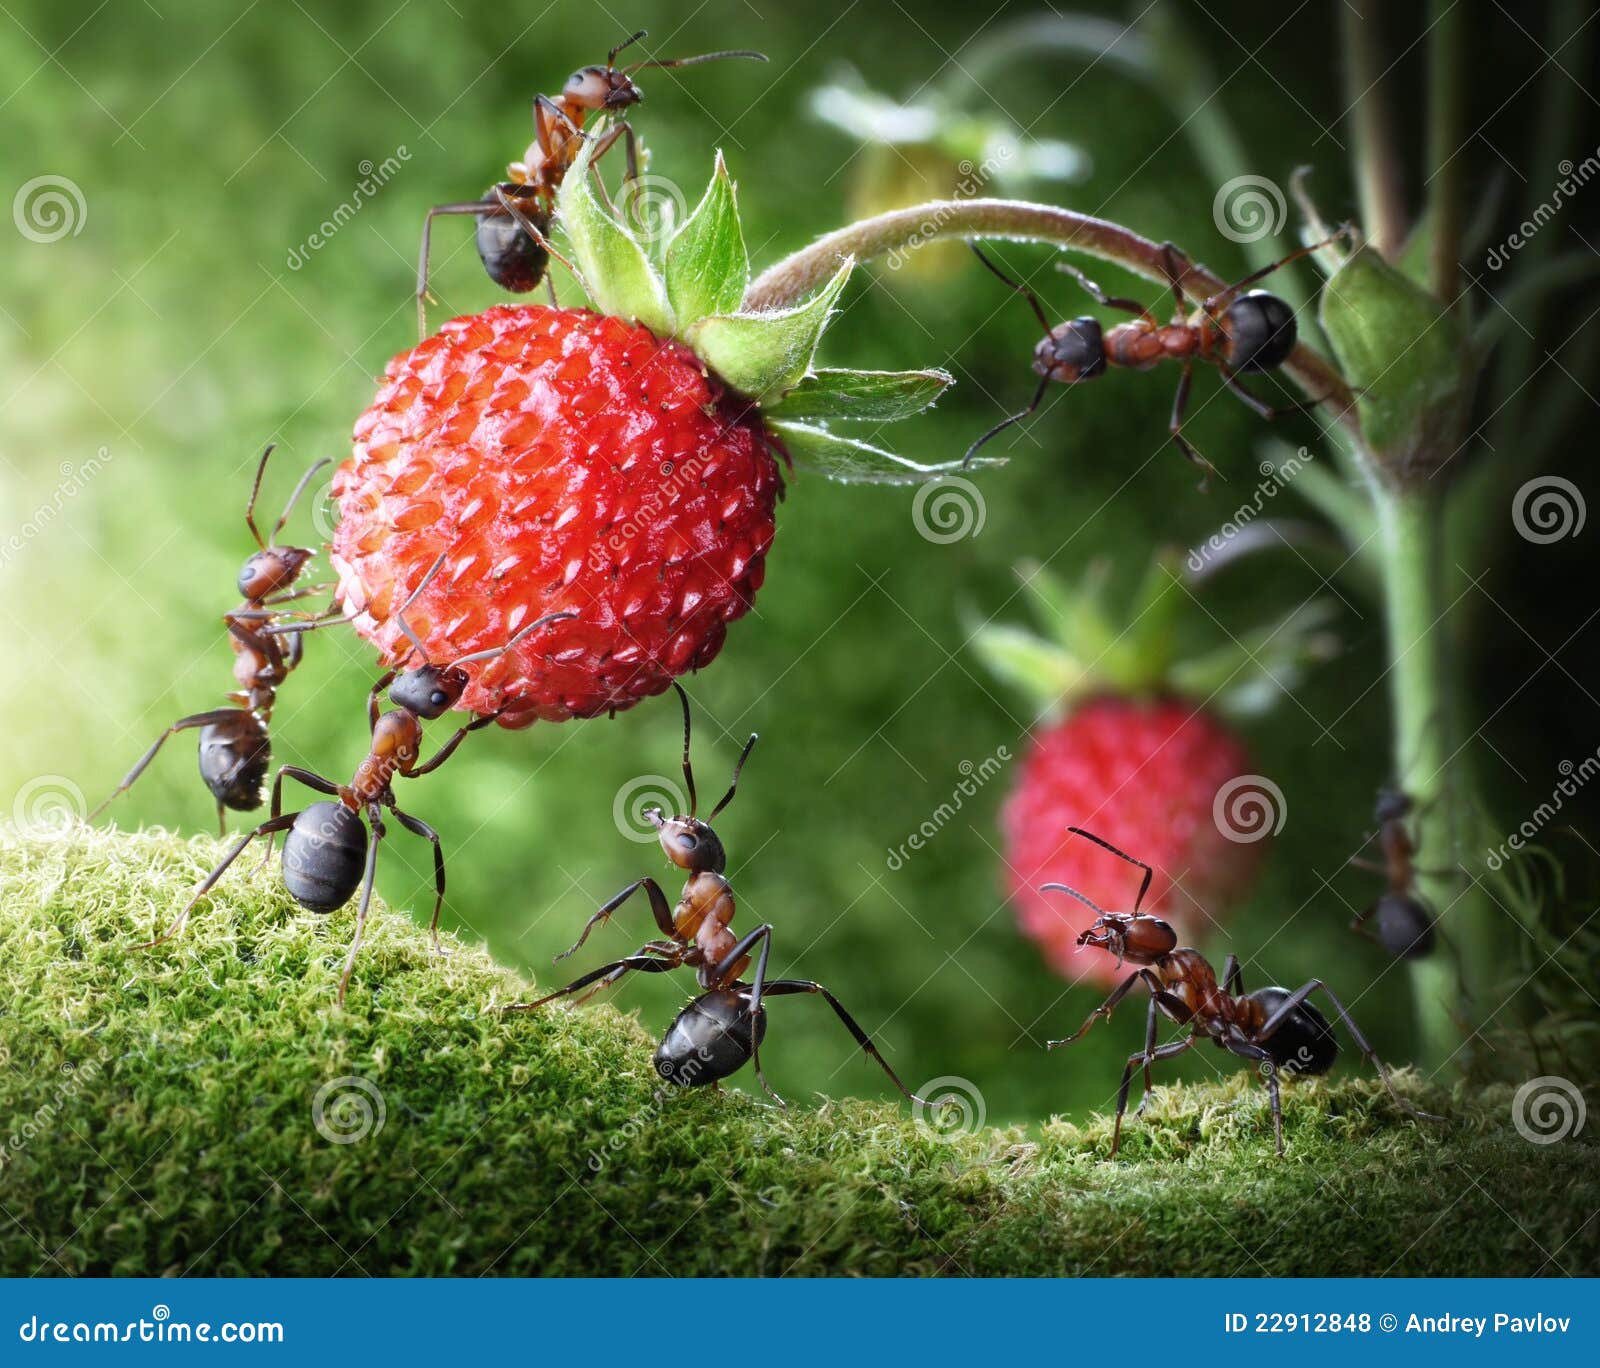 team of ants picking wild strawberry, teamwork